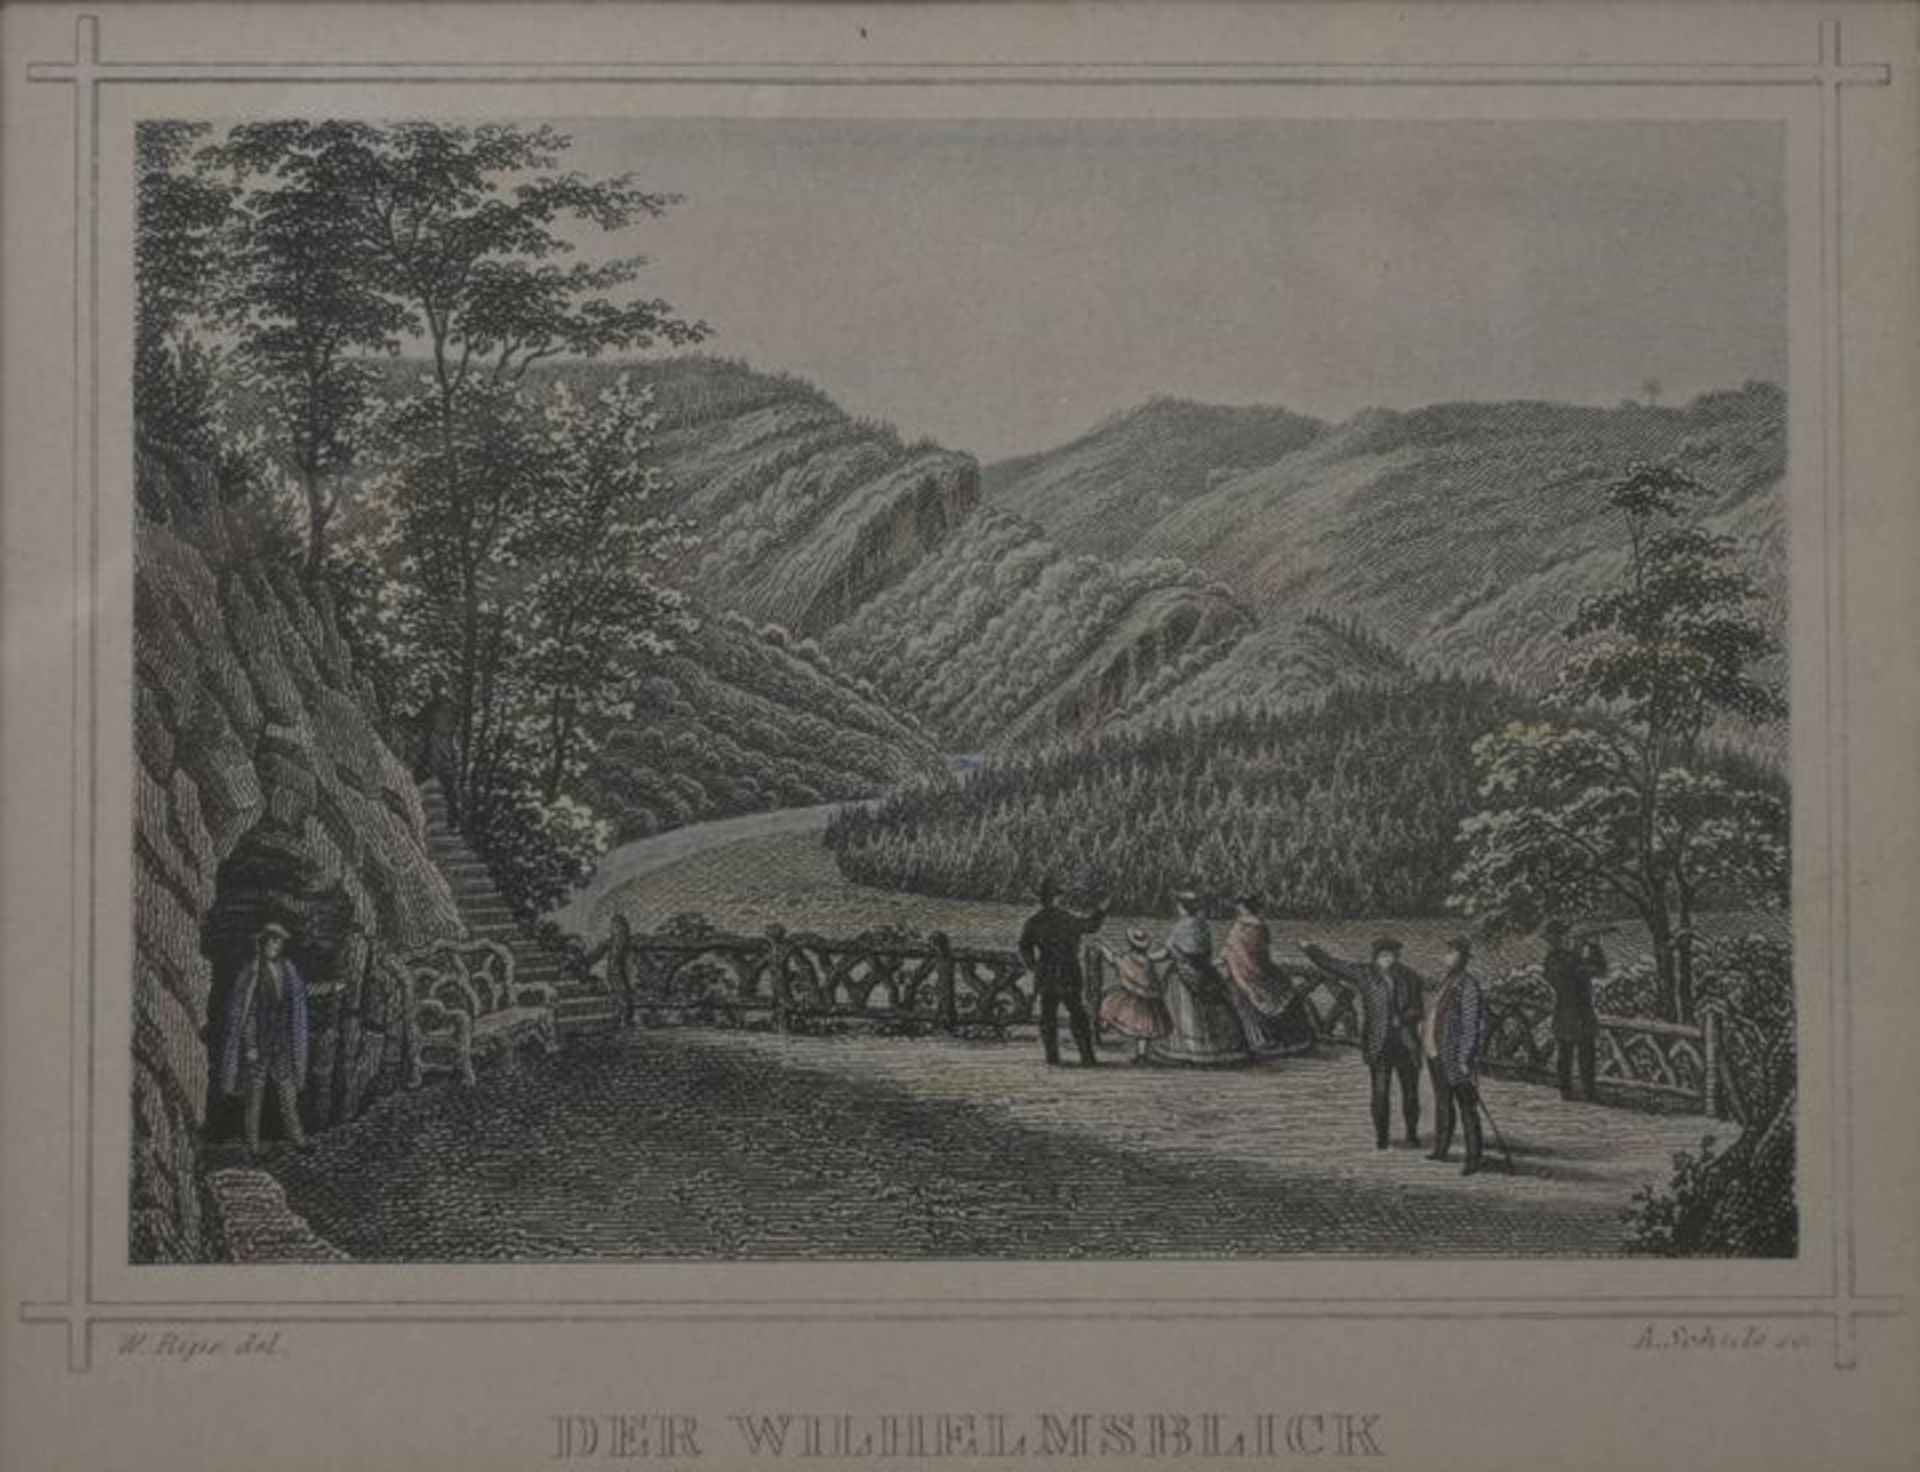 Schule, Albert. 1801-1875 LeipzigWilhelmsblick - Bodetal im Harz. Stahlstich, um 1840, Kolori